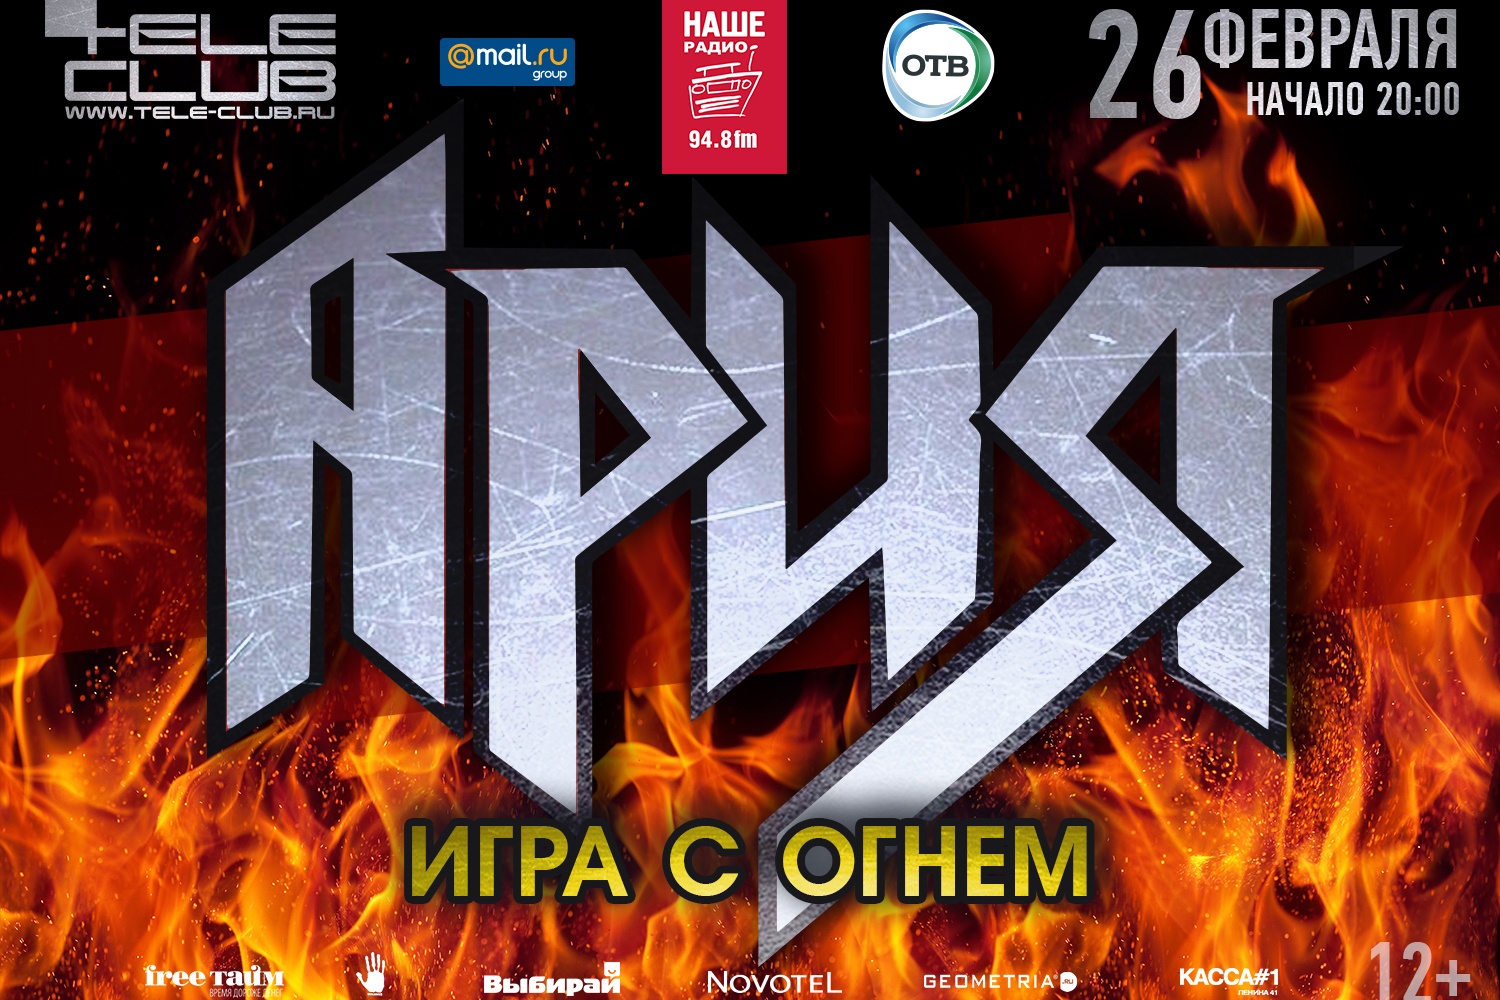 Ария самара. Ария концерт Екатеринбург. Ария плакат на концерт\. Teleclub Ария. Ария афиша.